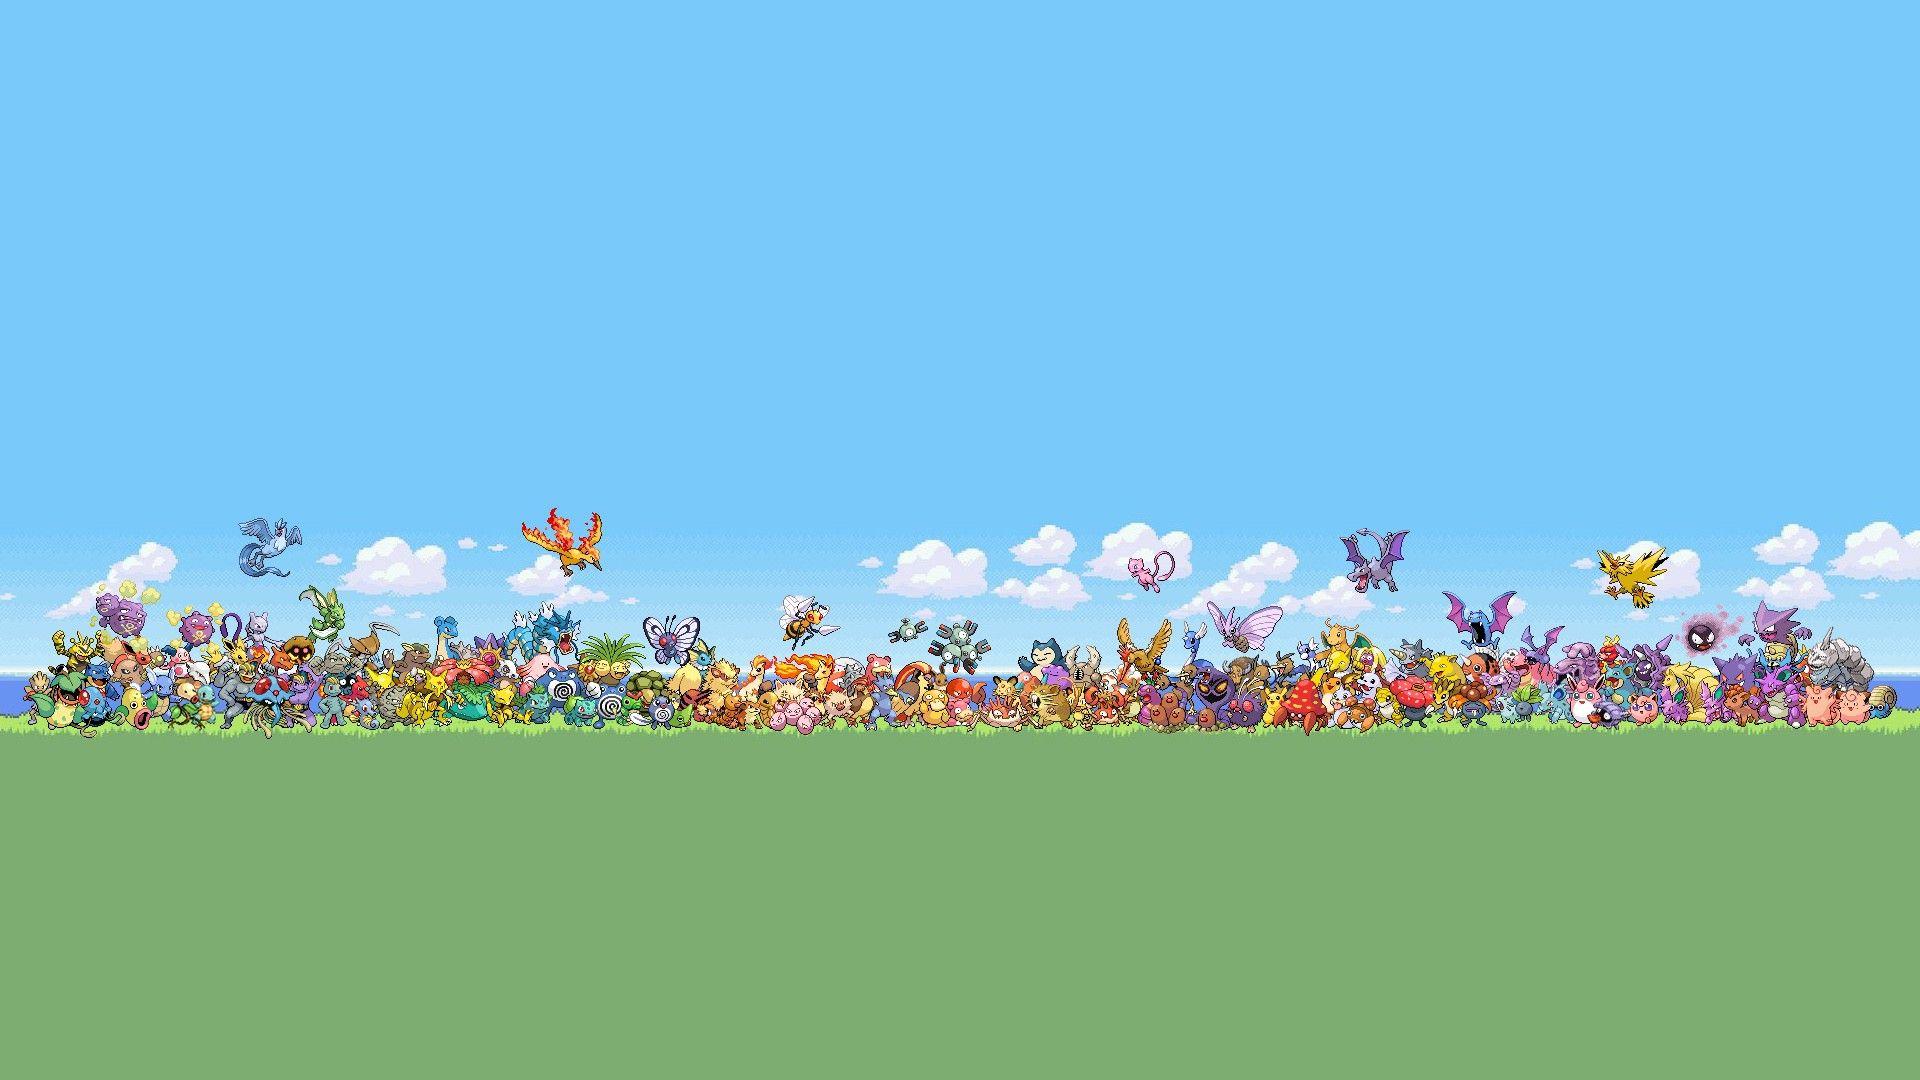 Retro #Pokemon [Gaming • Nature • Movies Shows] #desktop #wallpaper bit bit #bit #ocean #sea #beach #clouds #grass